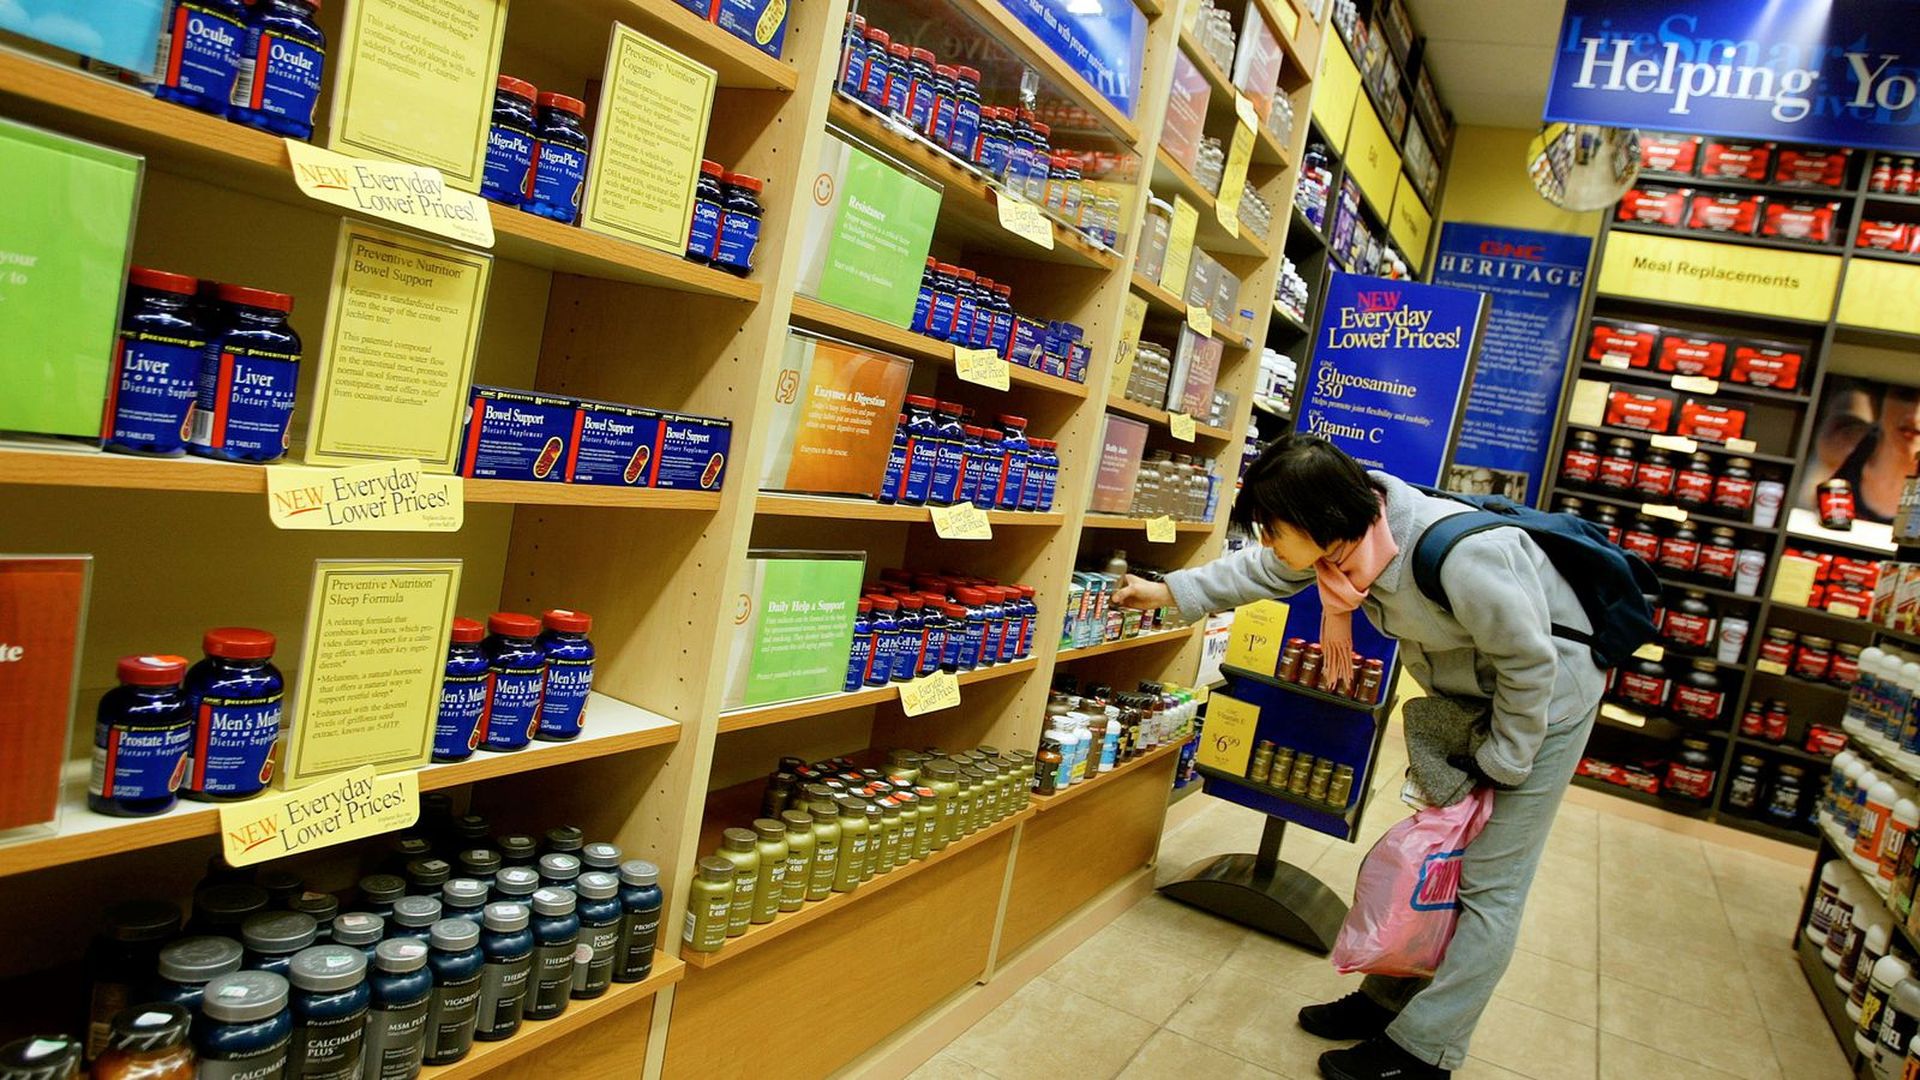 A shopper looks through shelves of supplements.